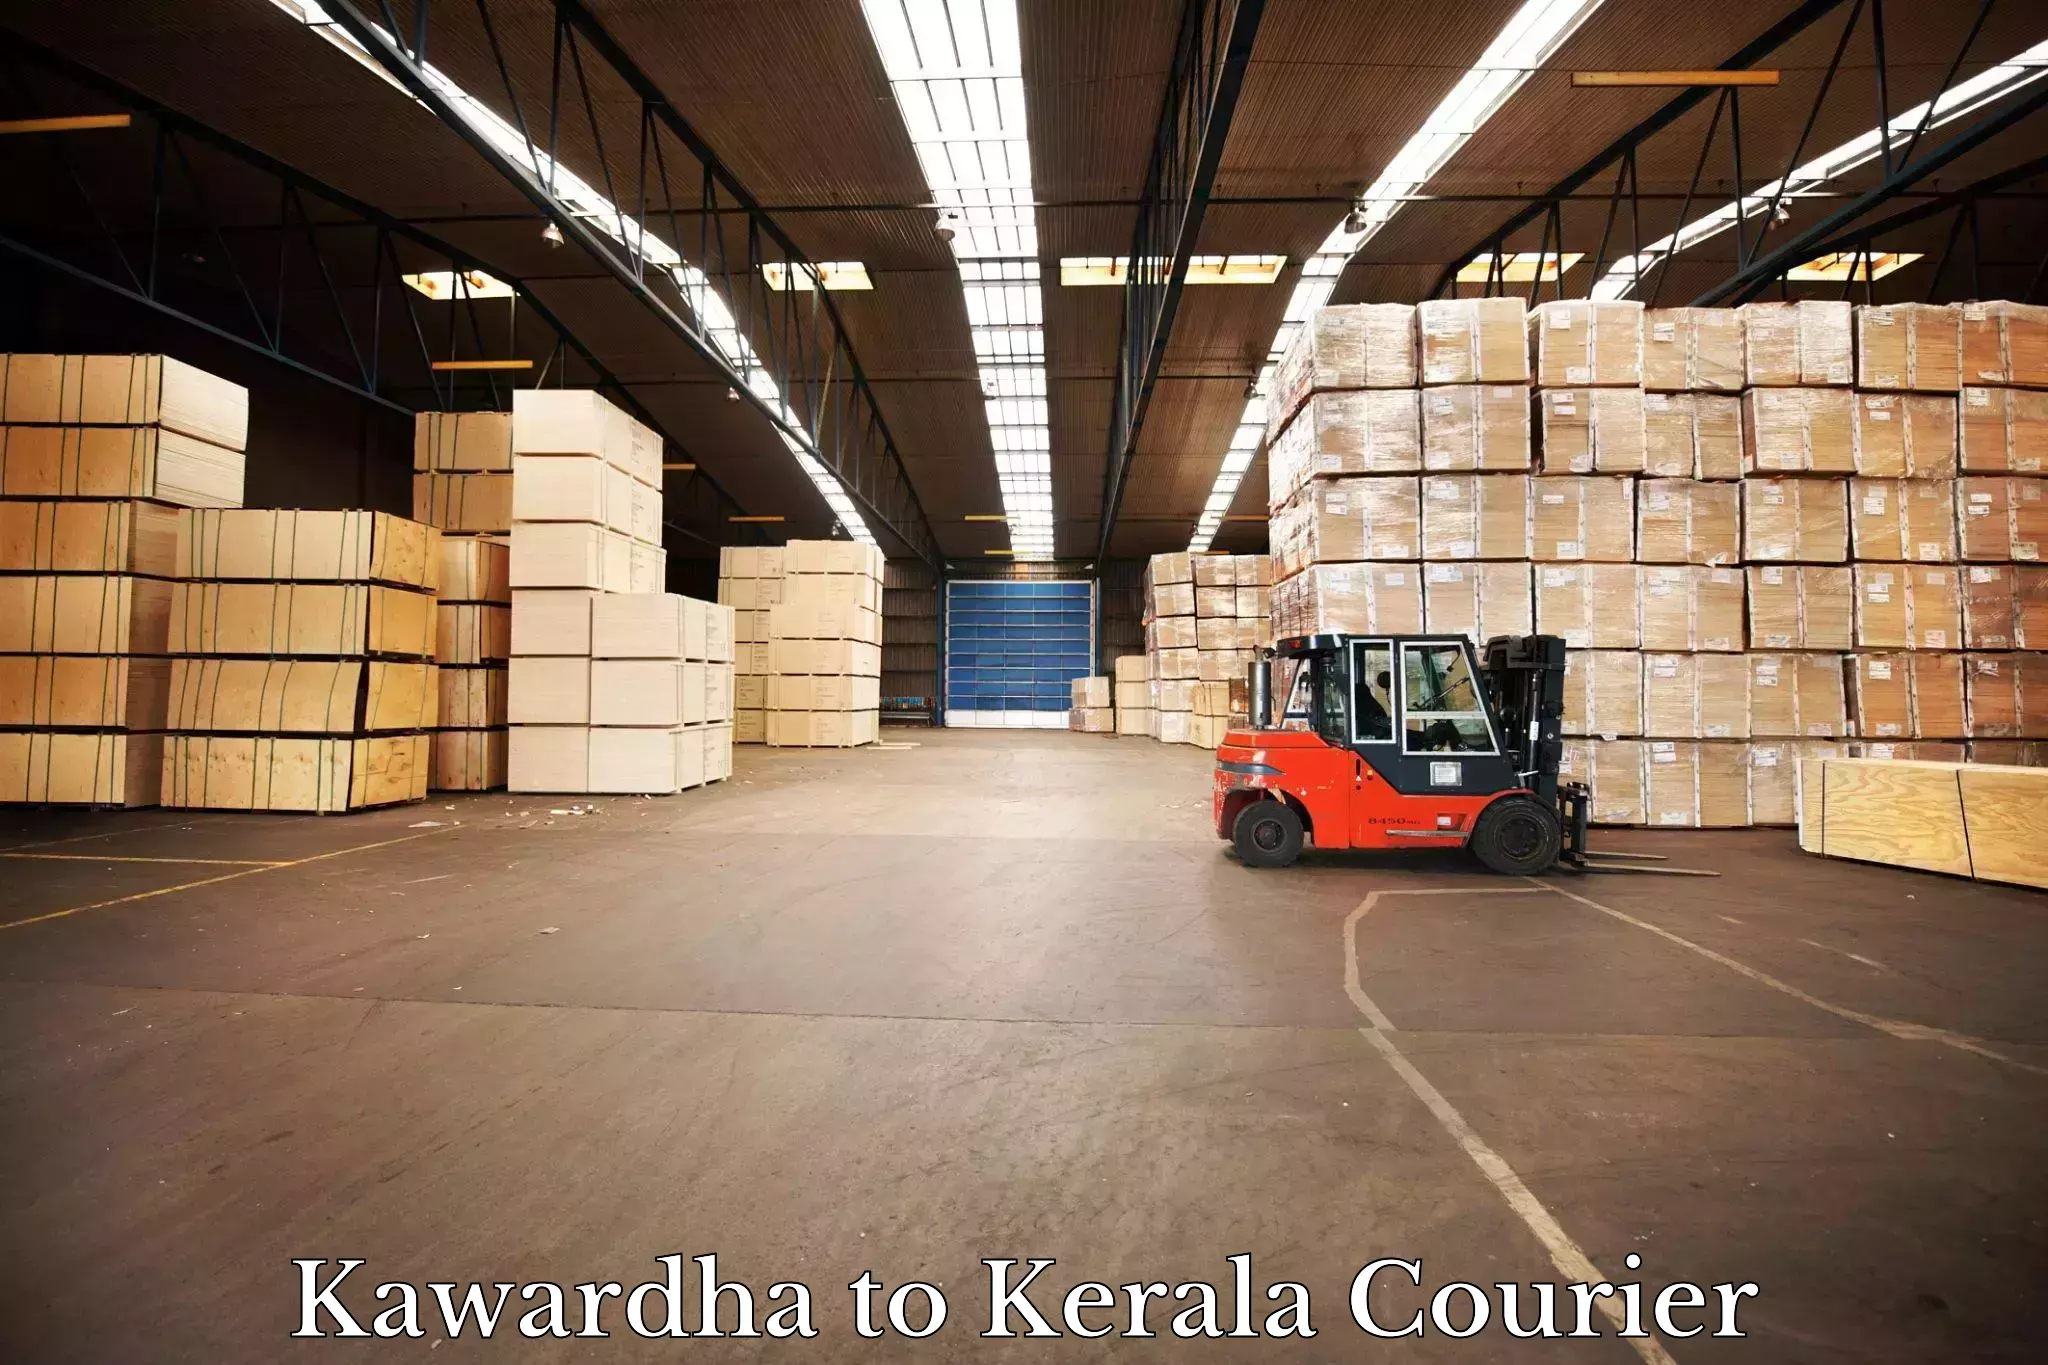 Express delivery network Kawardha to Changanacherry